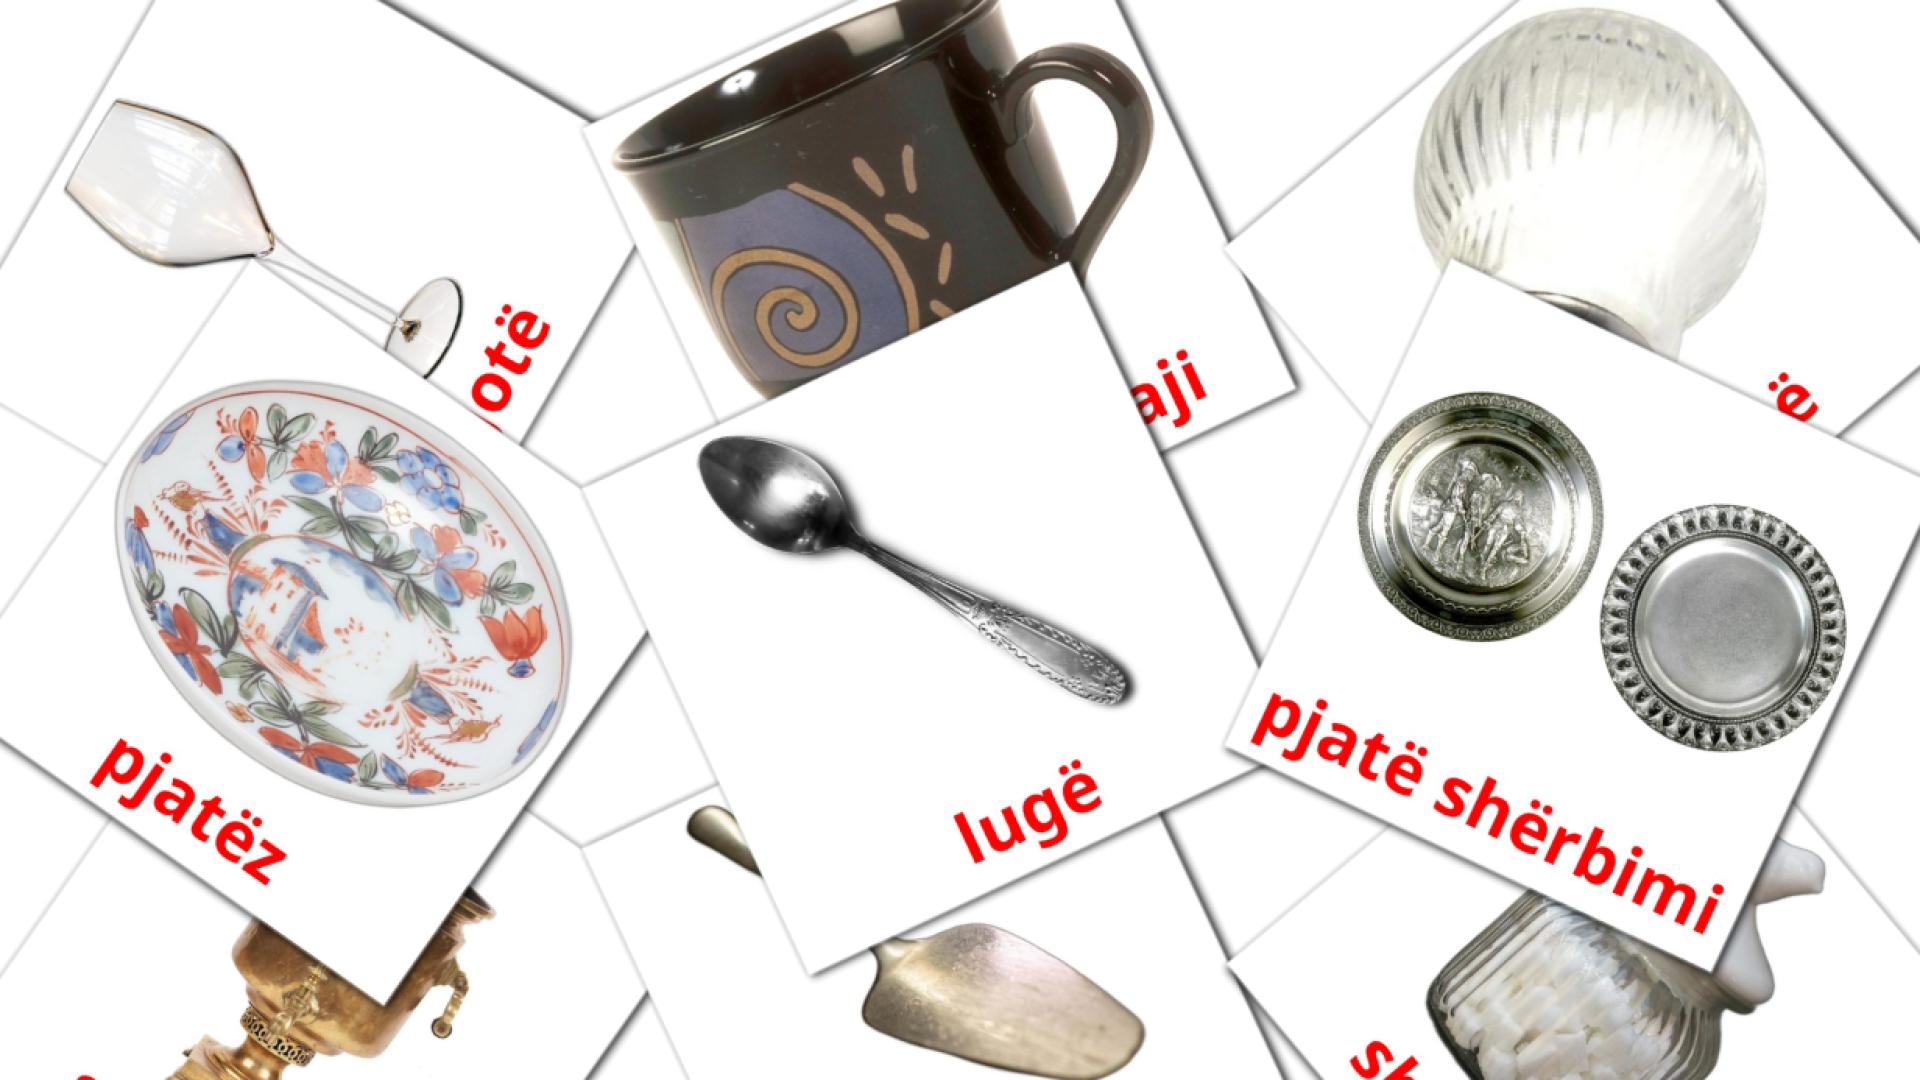 Crockery and cutlery - albanian vocabulary cards